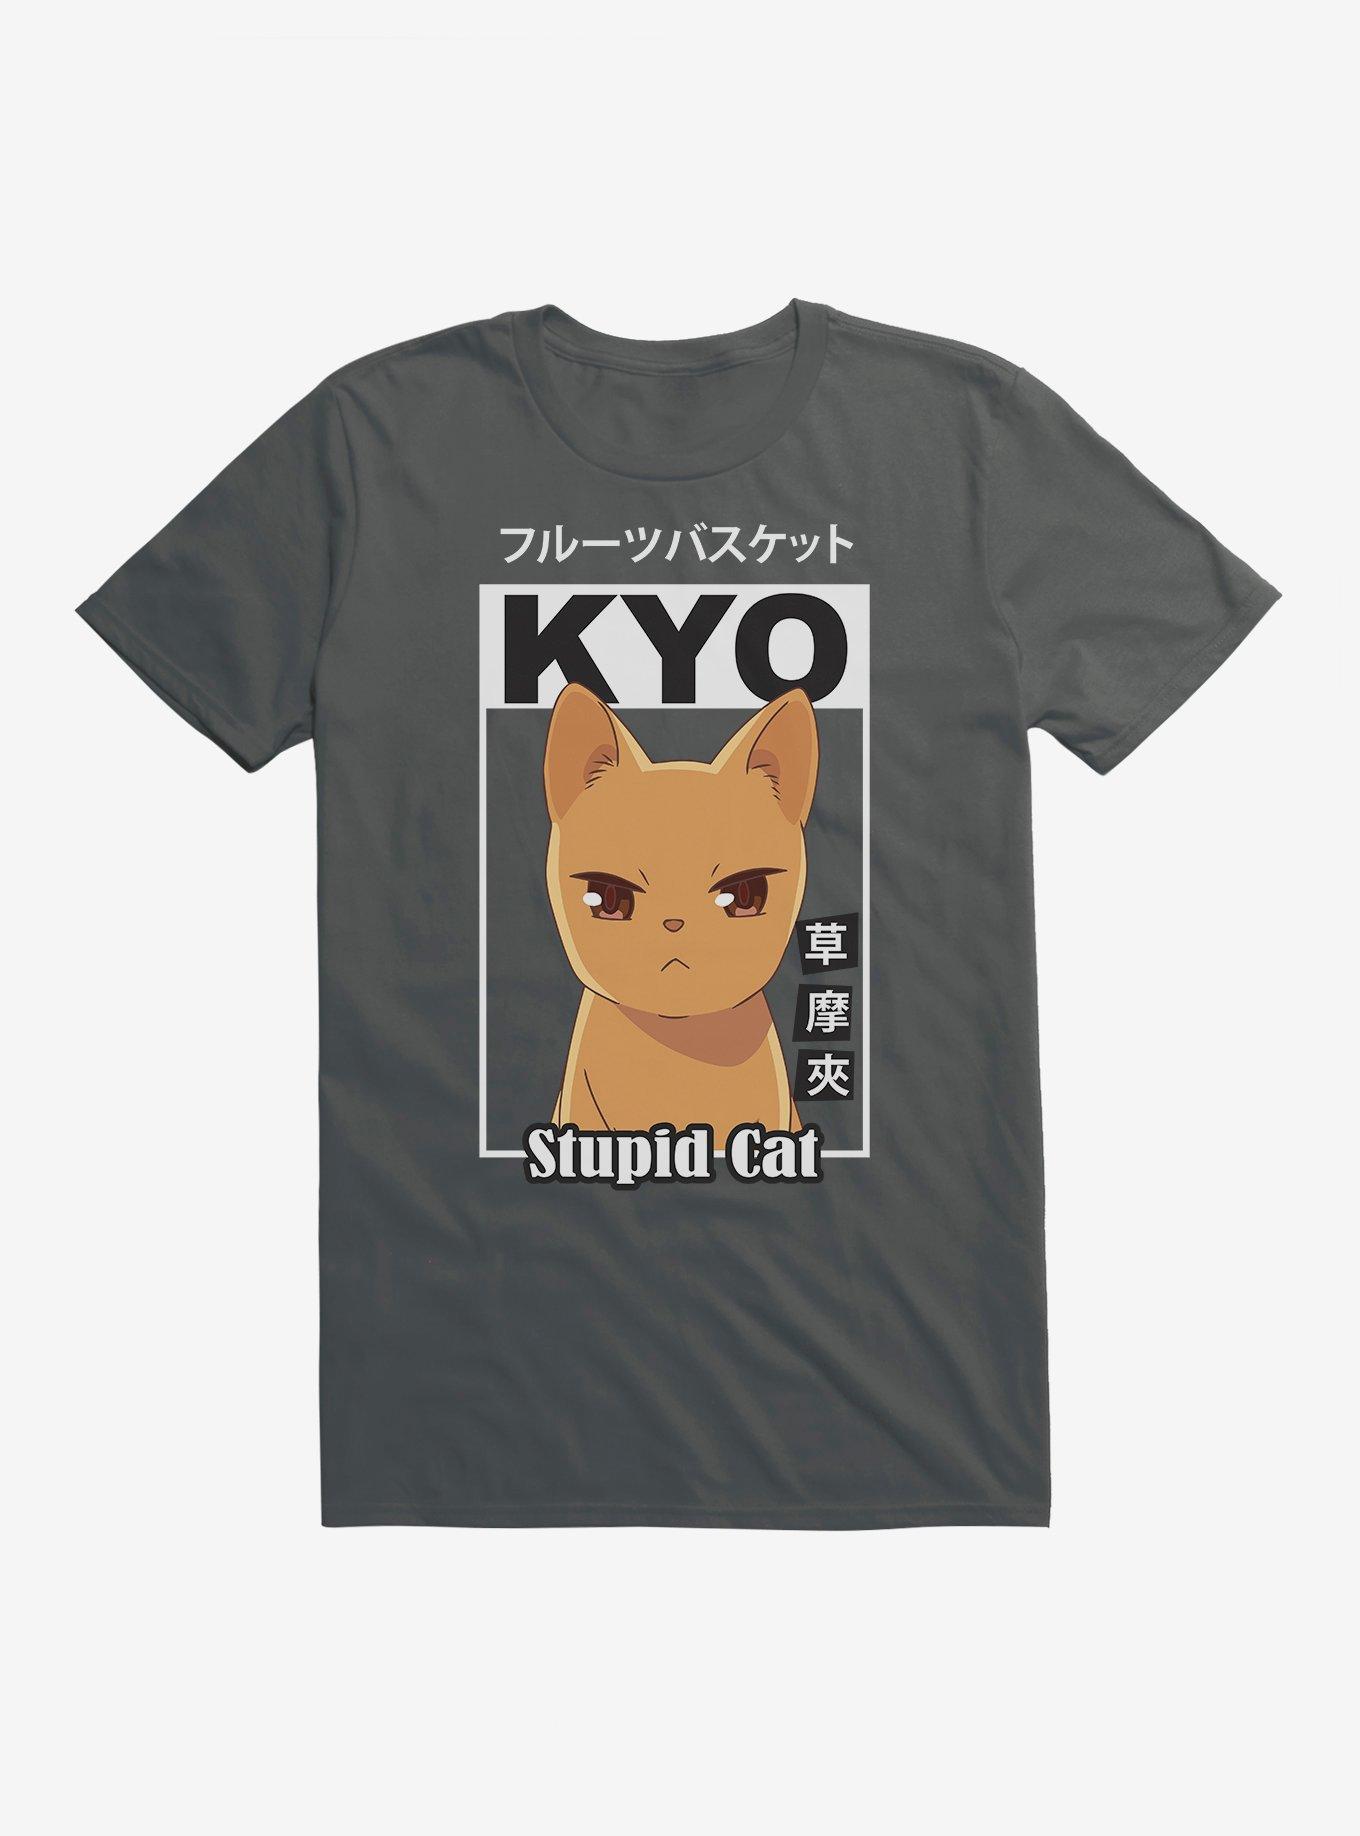 Fruits Basket Kyo Sohma Stupid Cat T-Shirt